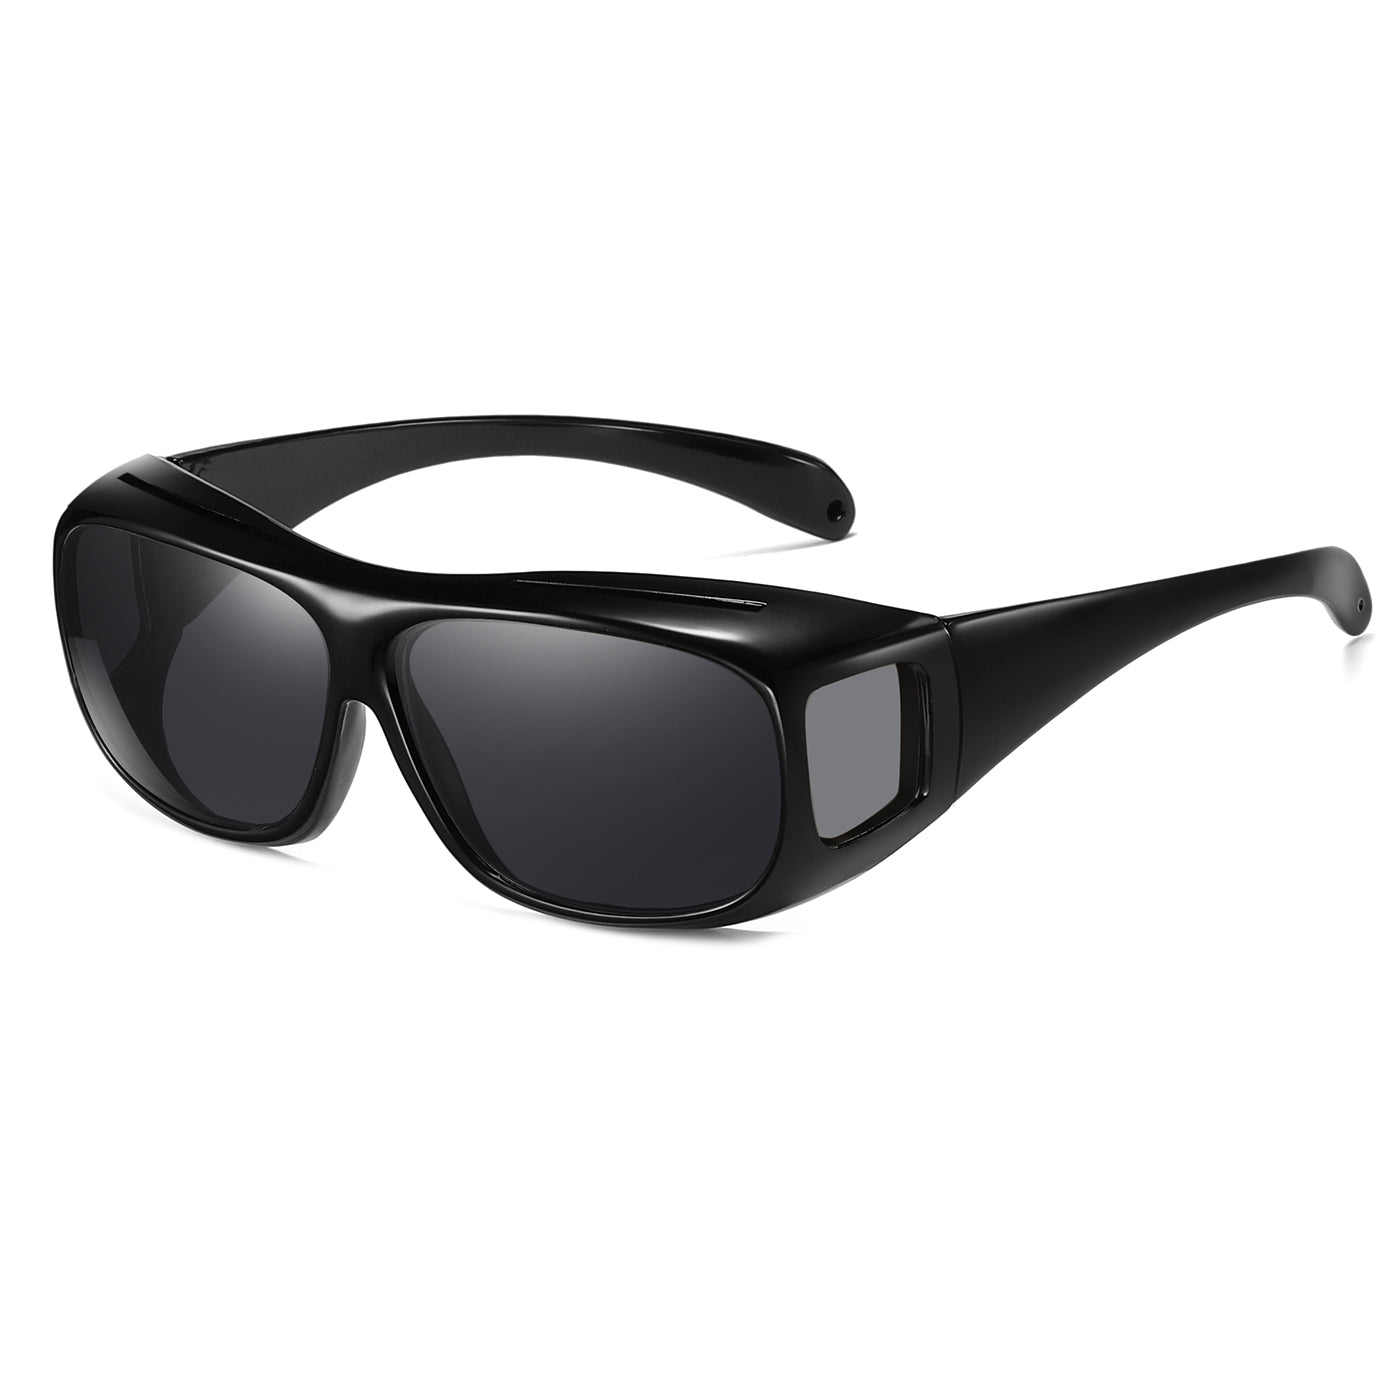 Aggregate 189+ hd vision wraparound sunglasses best